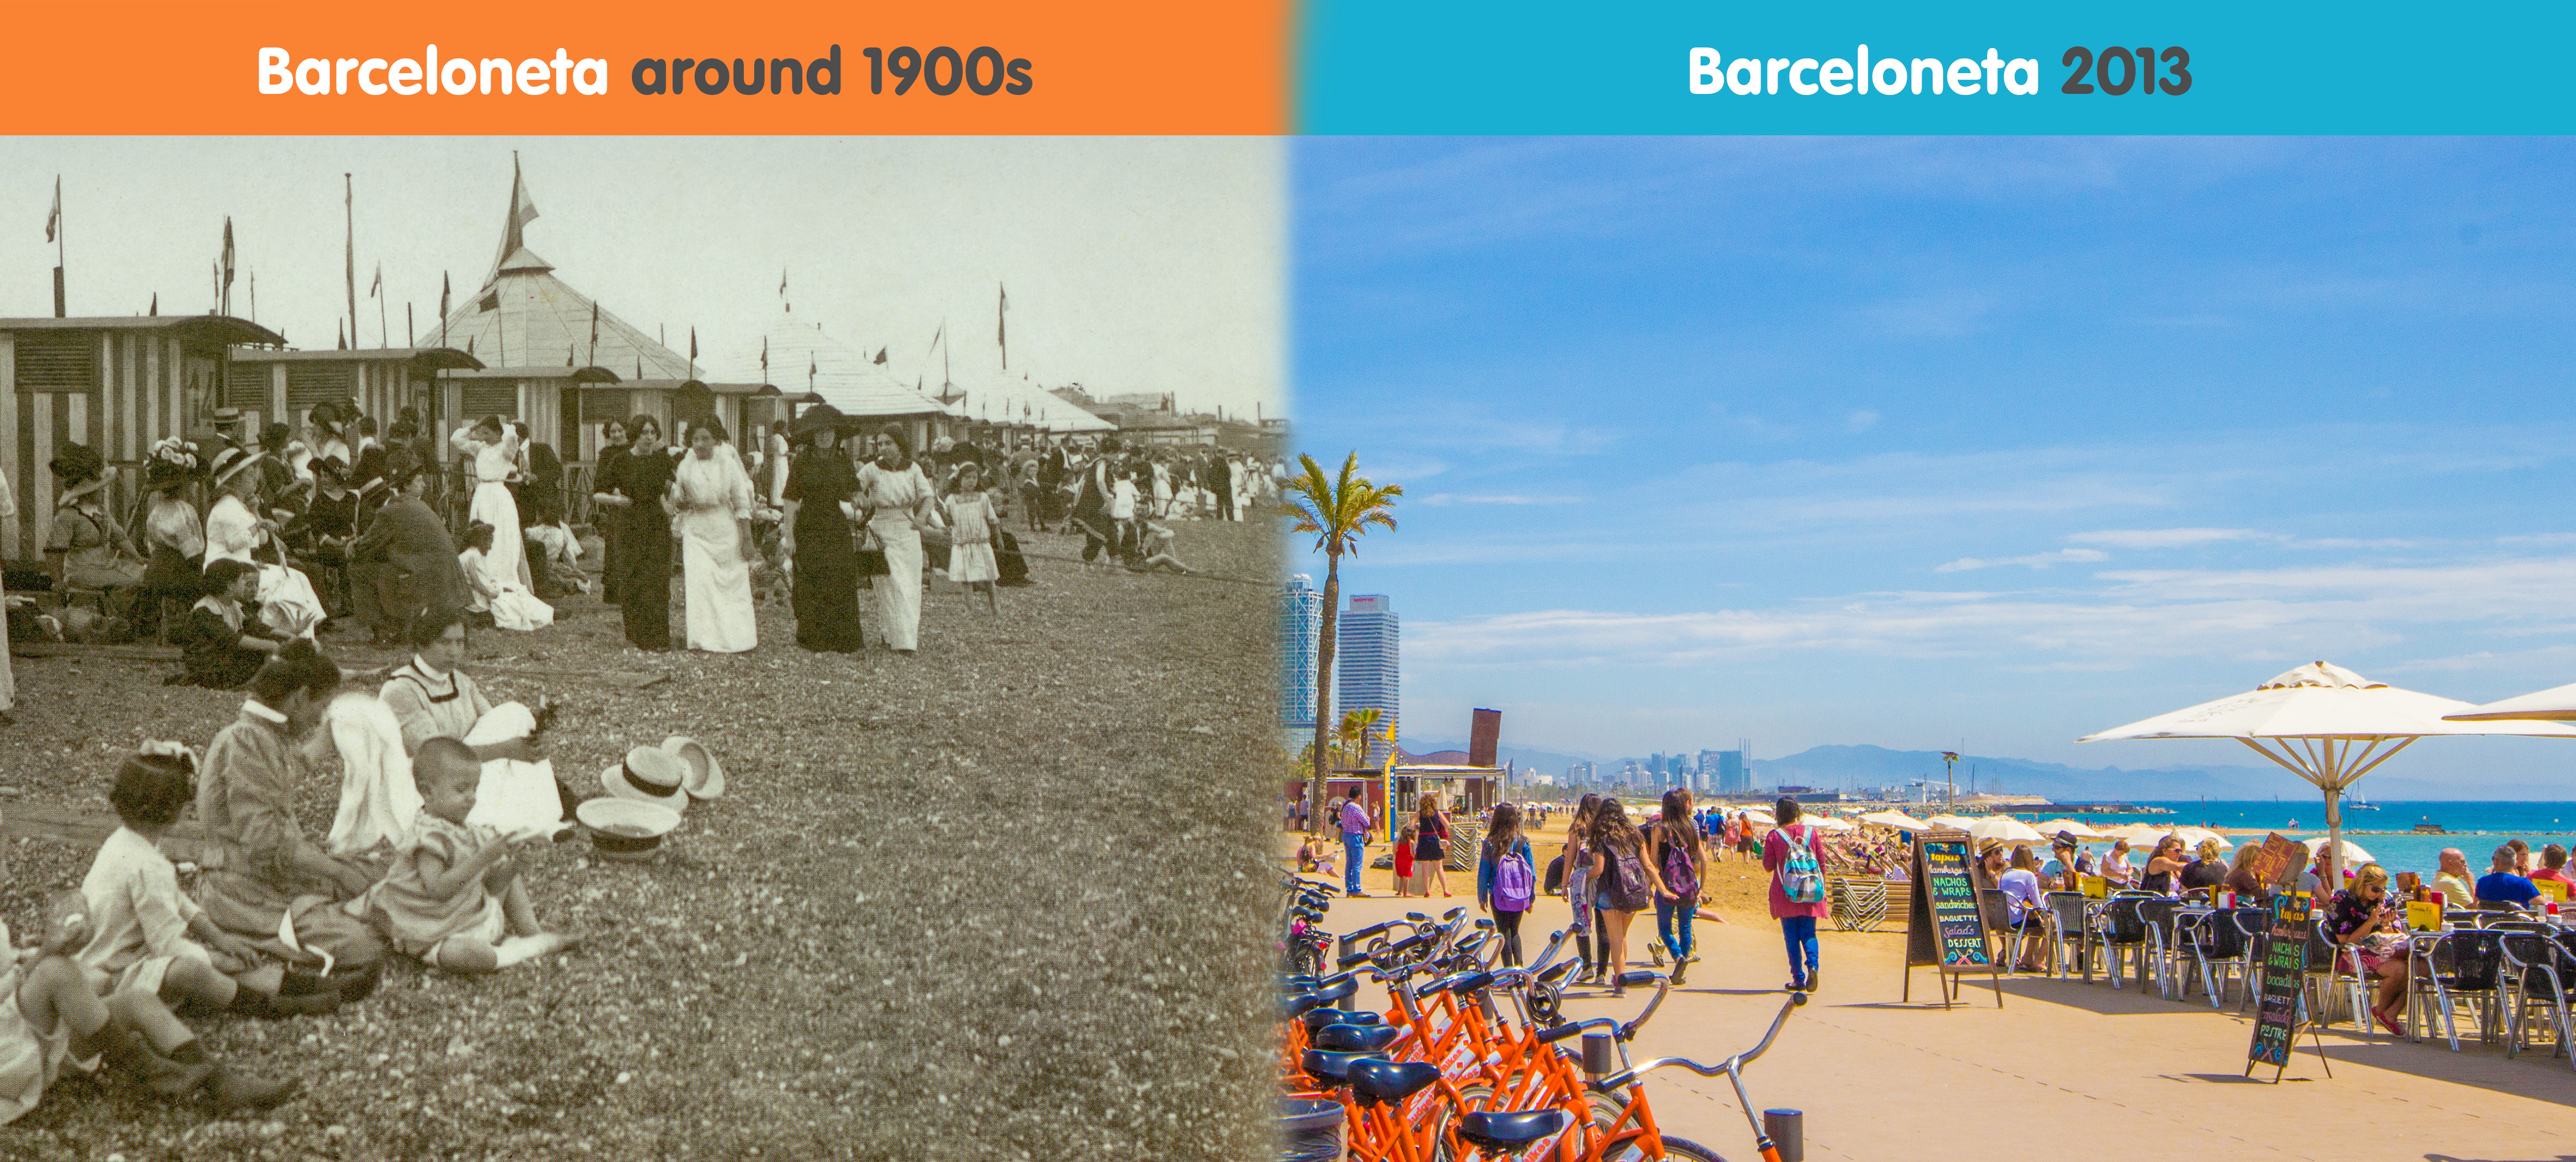 La Barceloneta - Now and Then